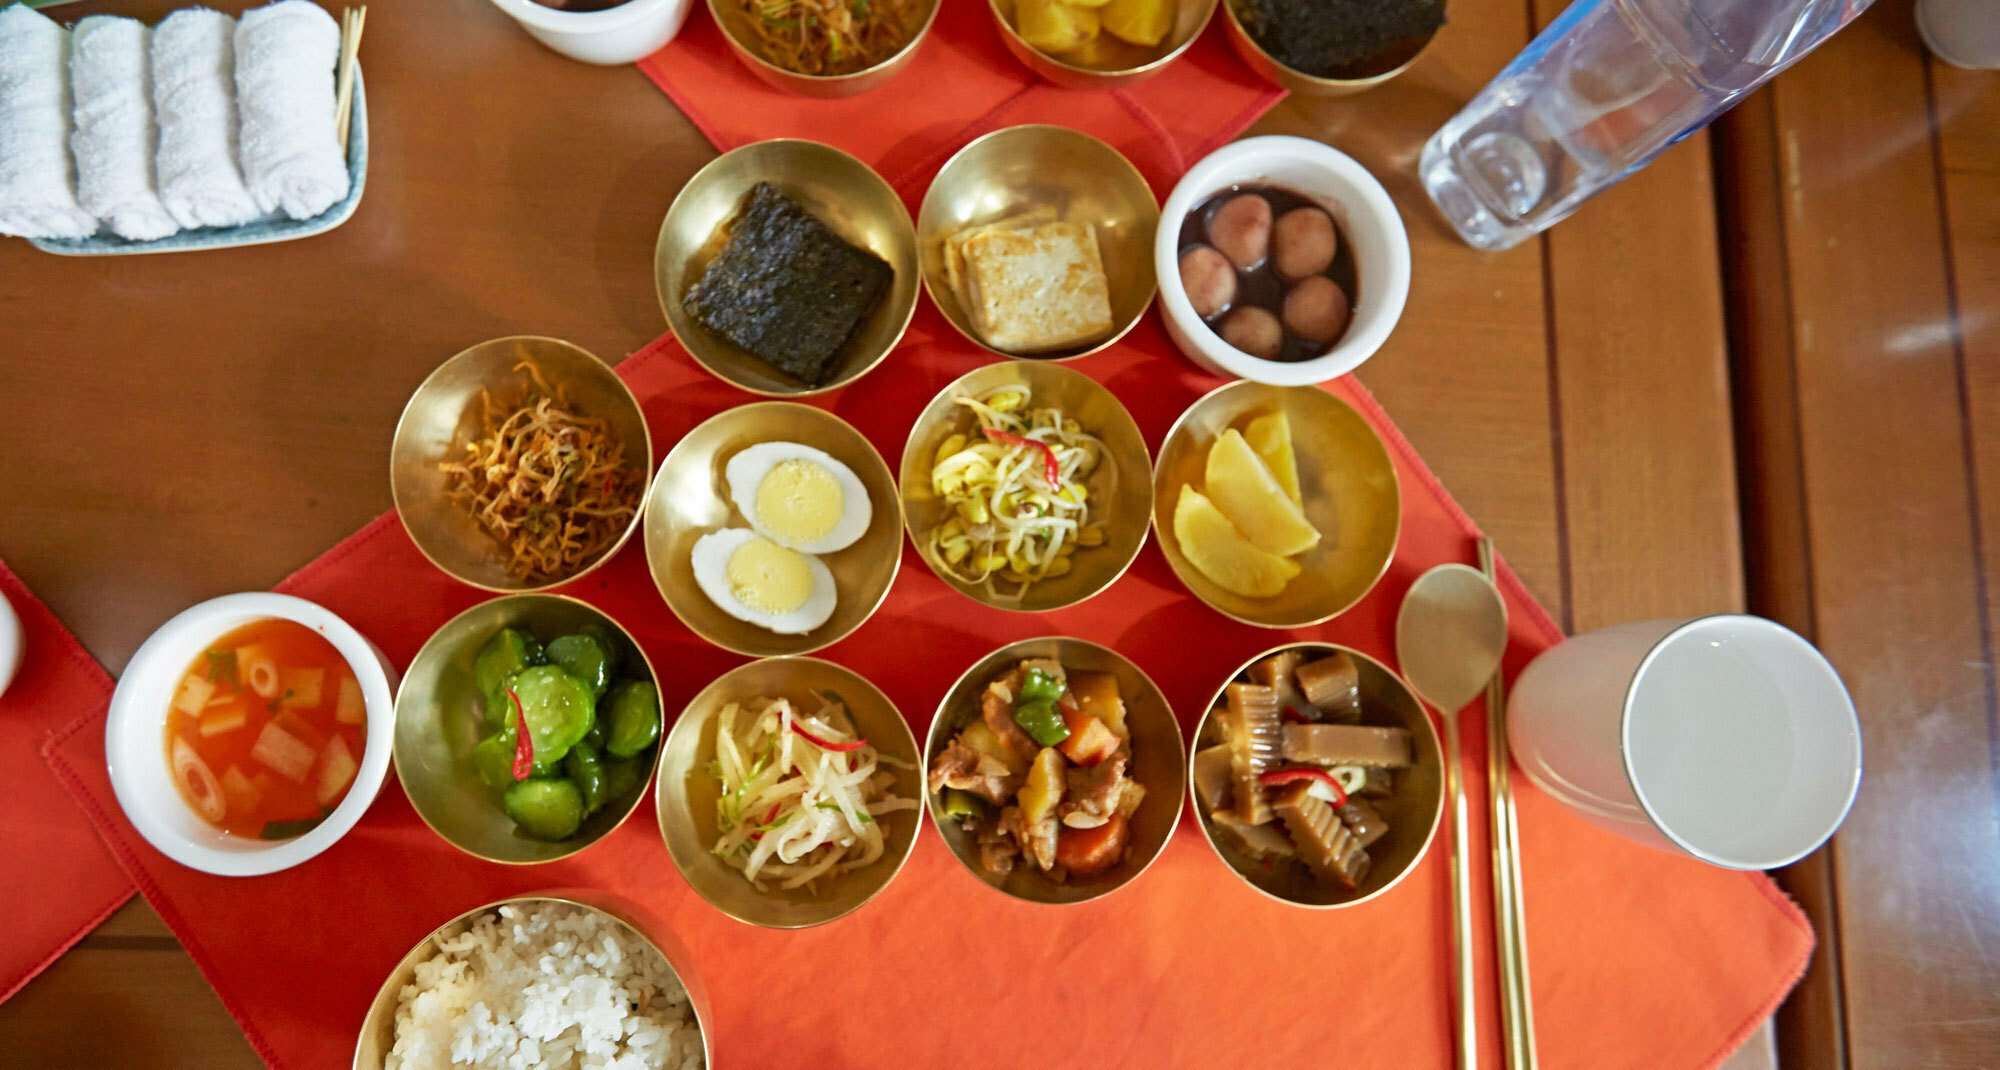 northkorea food diet meal dinner banchan sept 7 2015 nknews